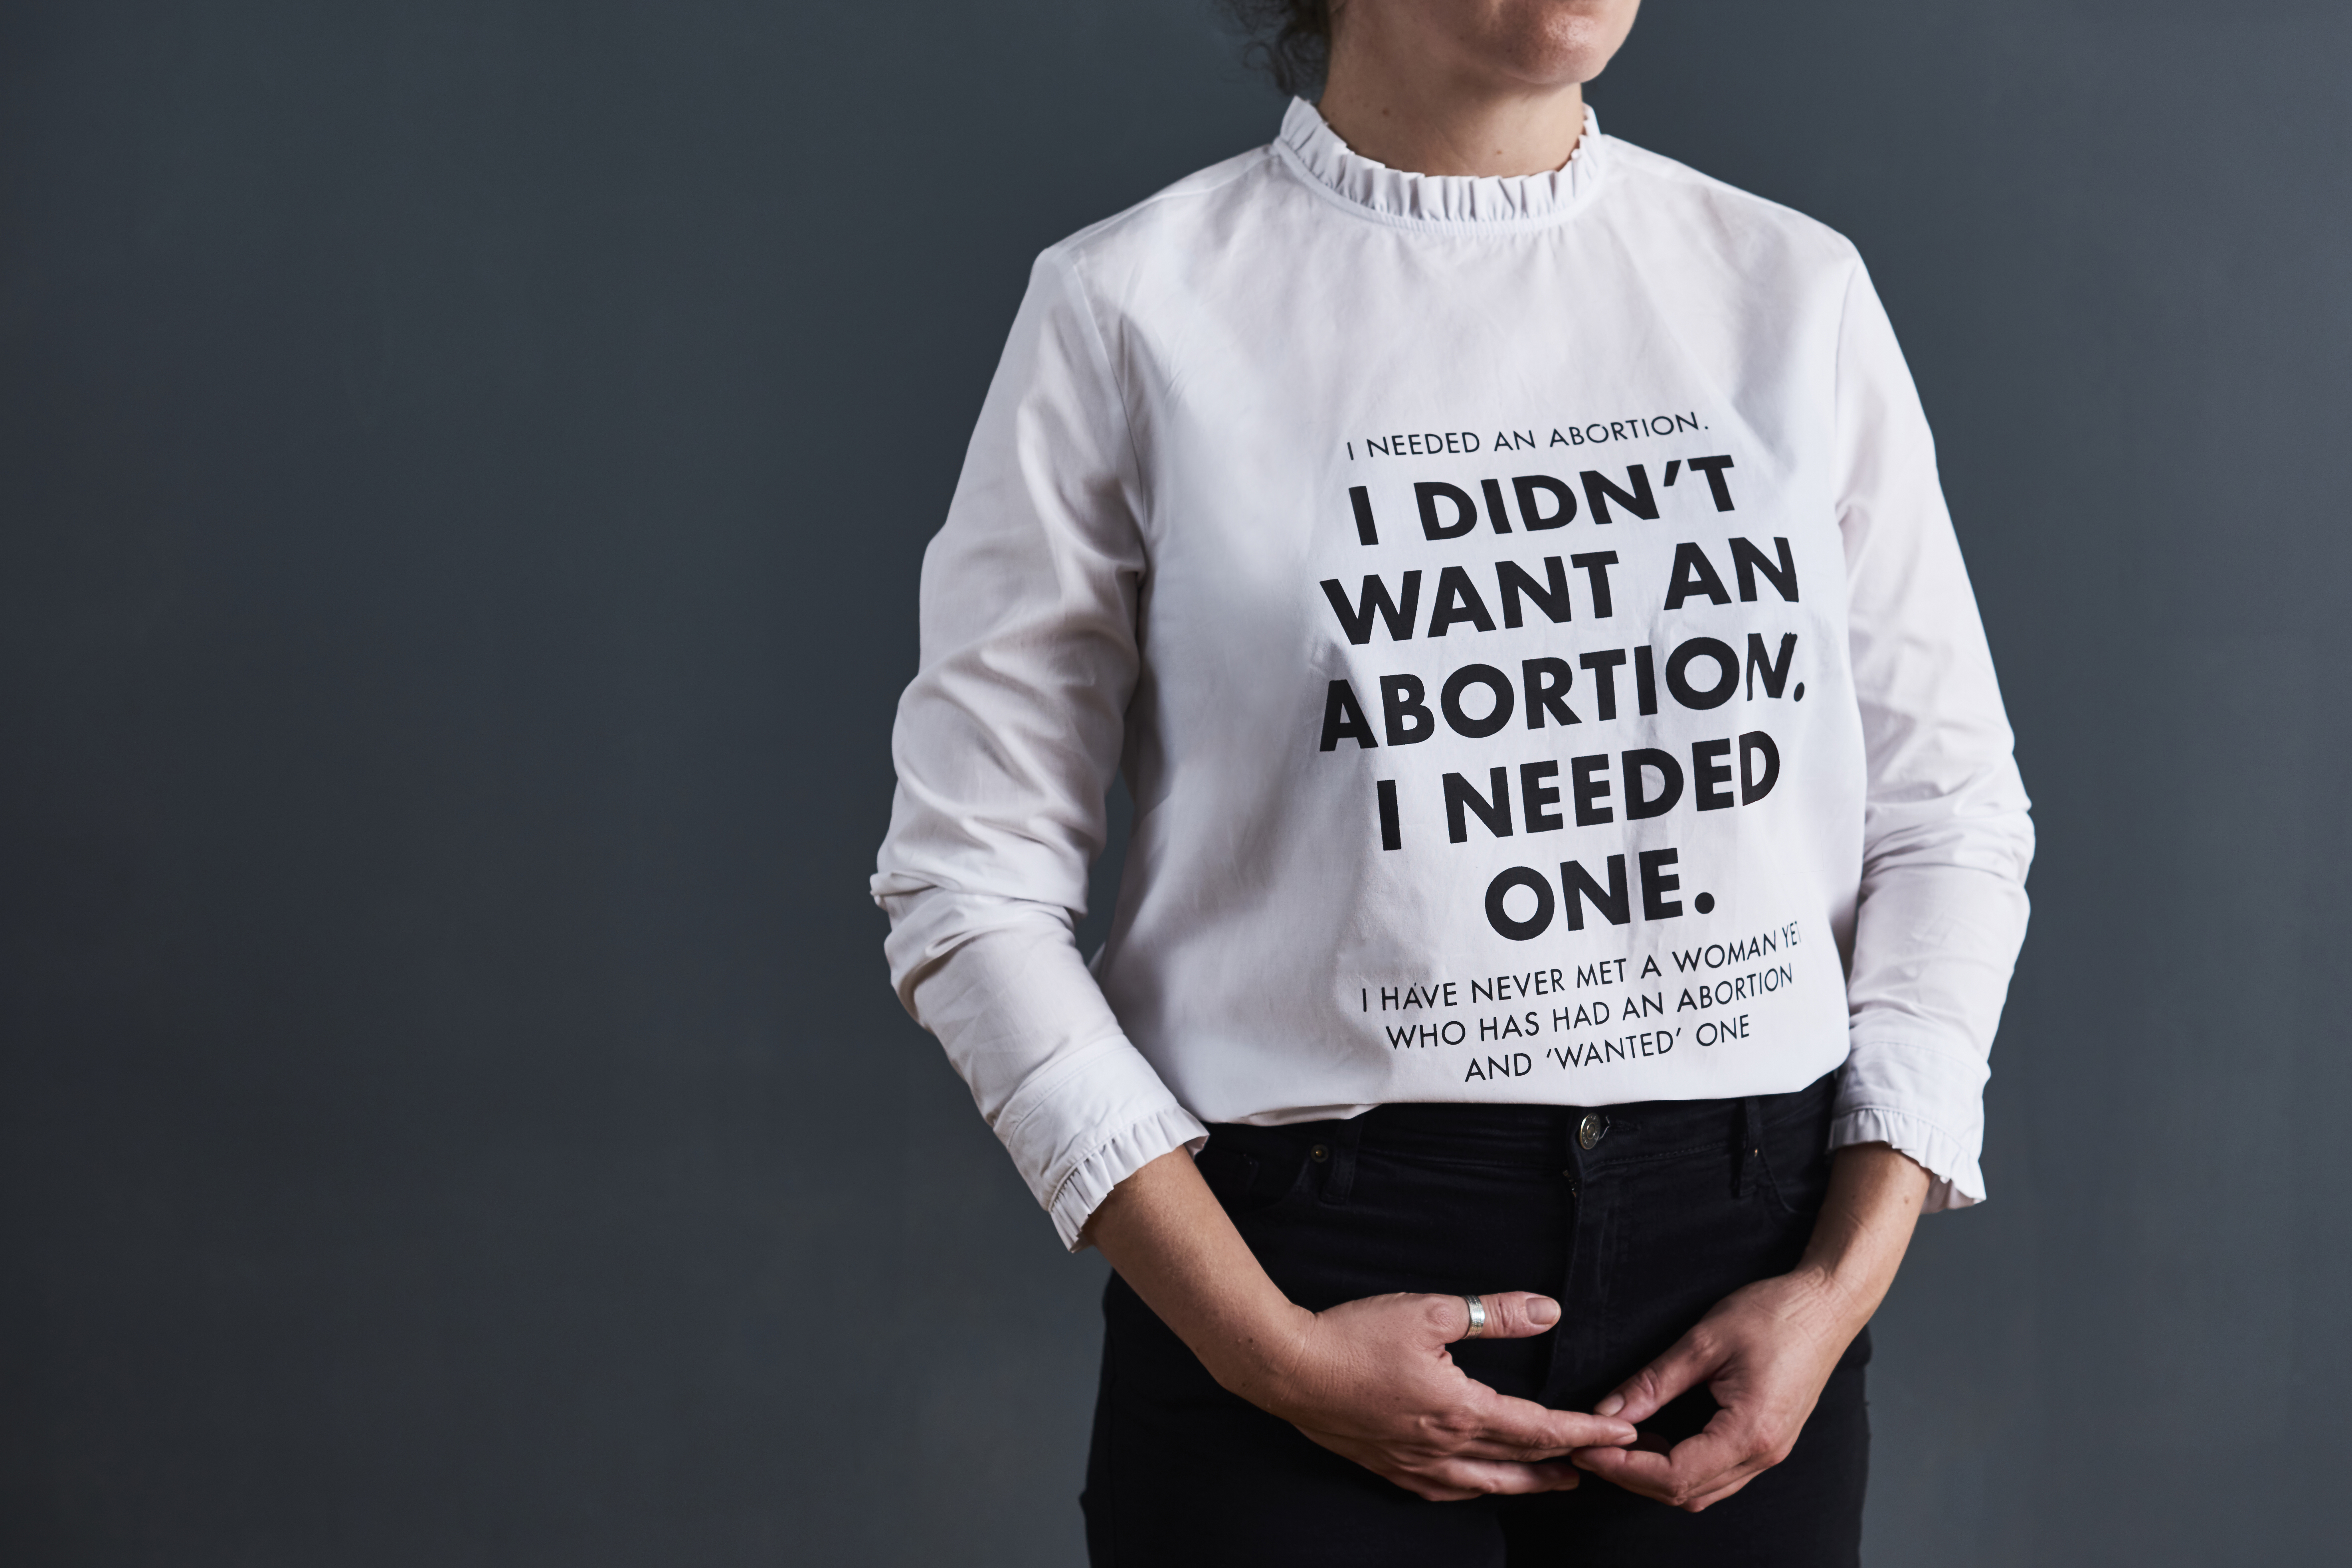 New exhibition challenges abortion stigma through clothing